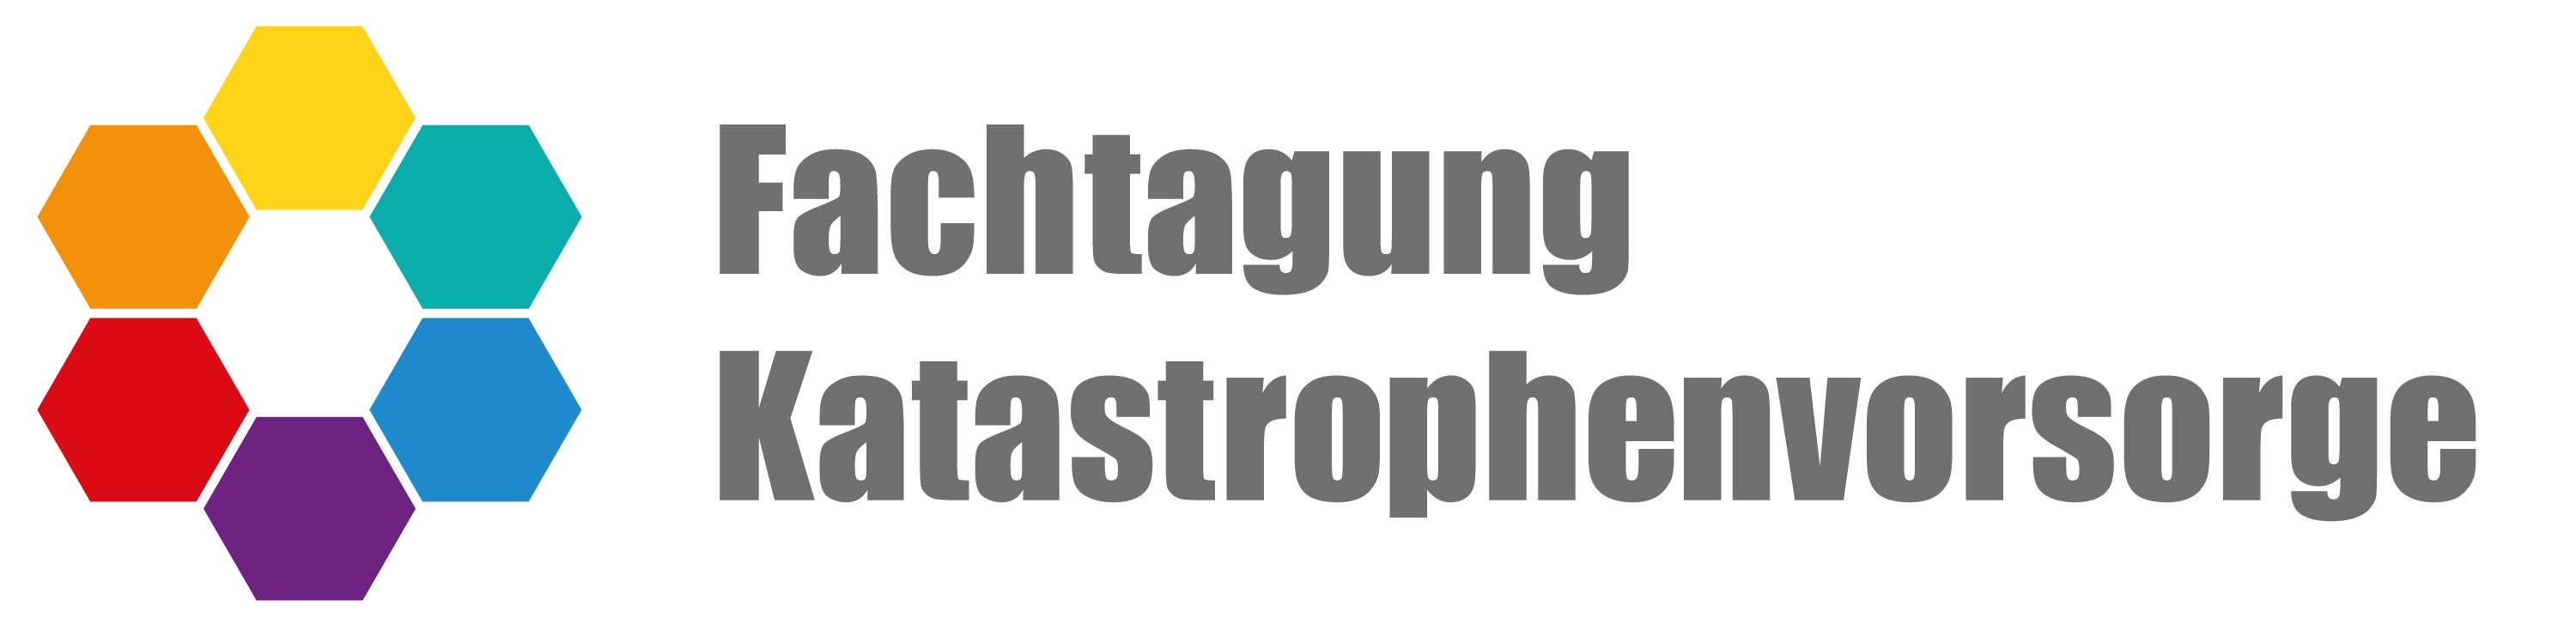 Logo der Fachtagung Katastrophenvorsorge